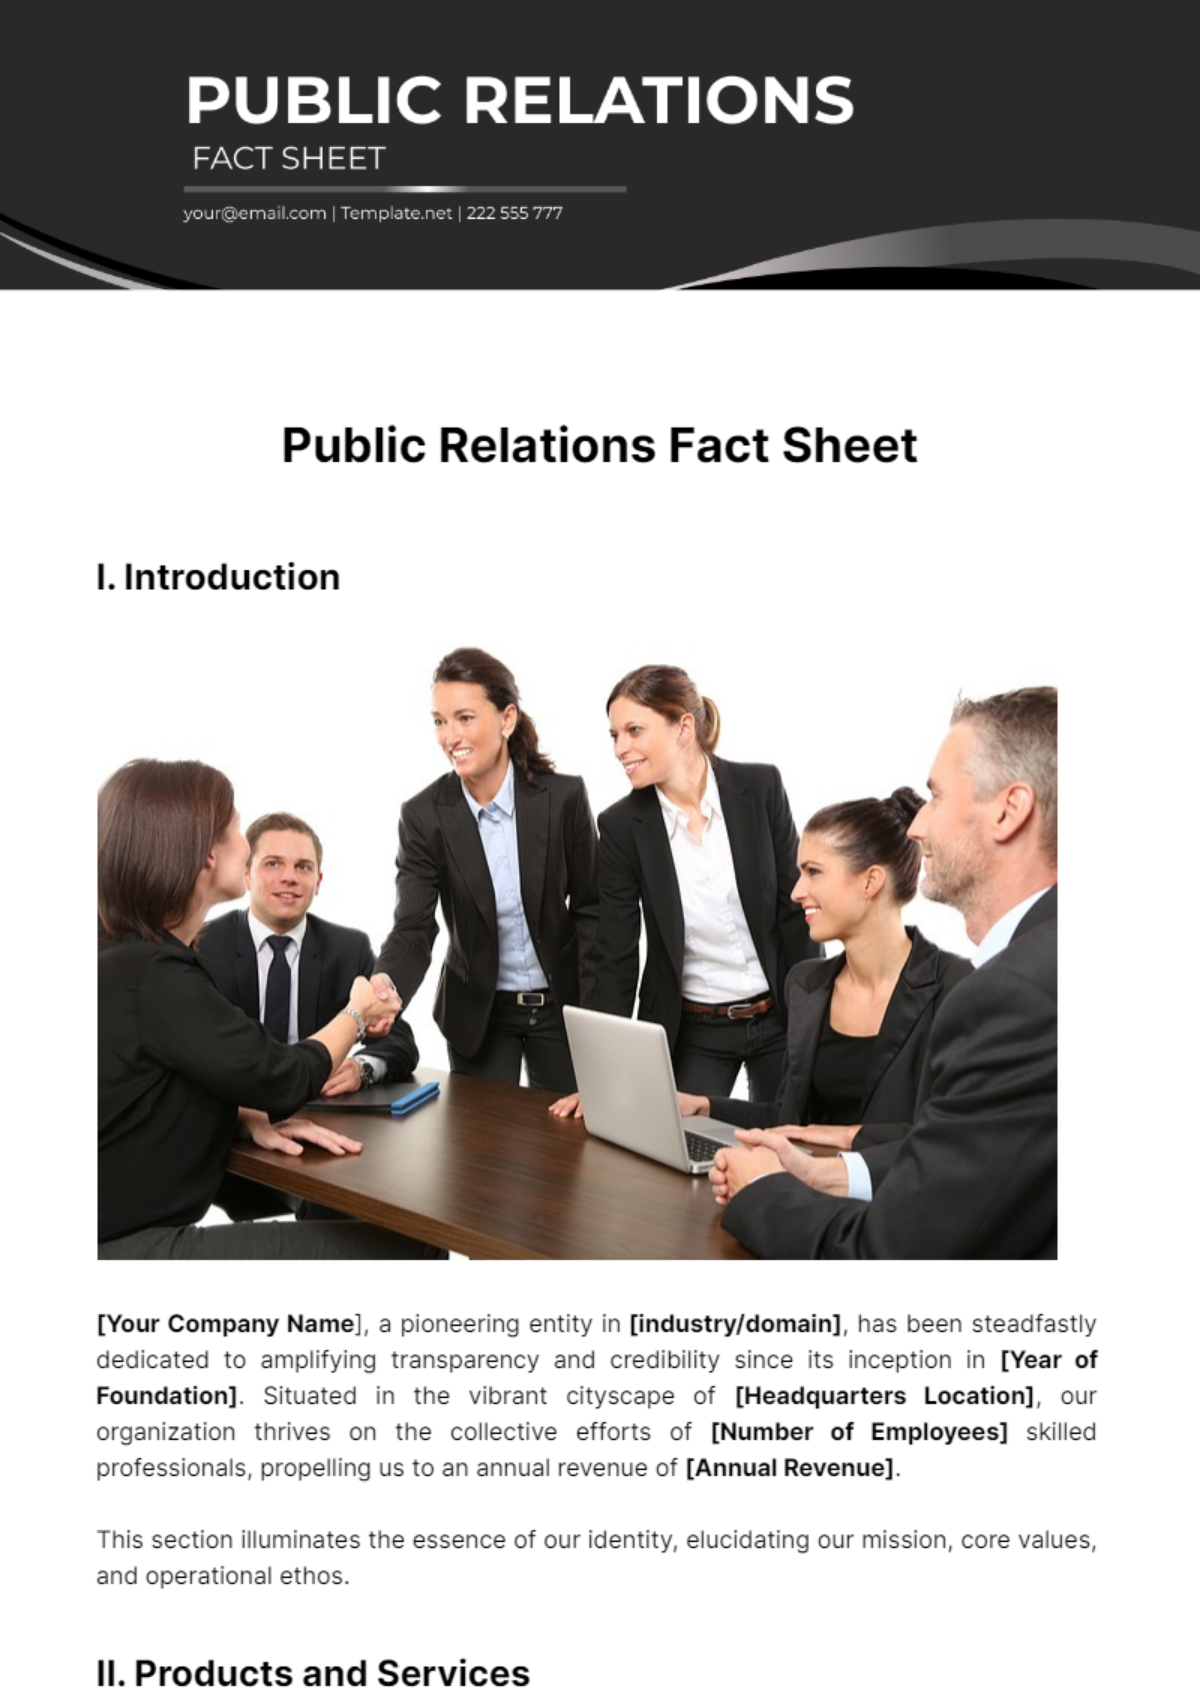 Public Relations Fact Sheet Template